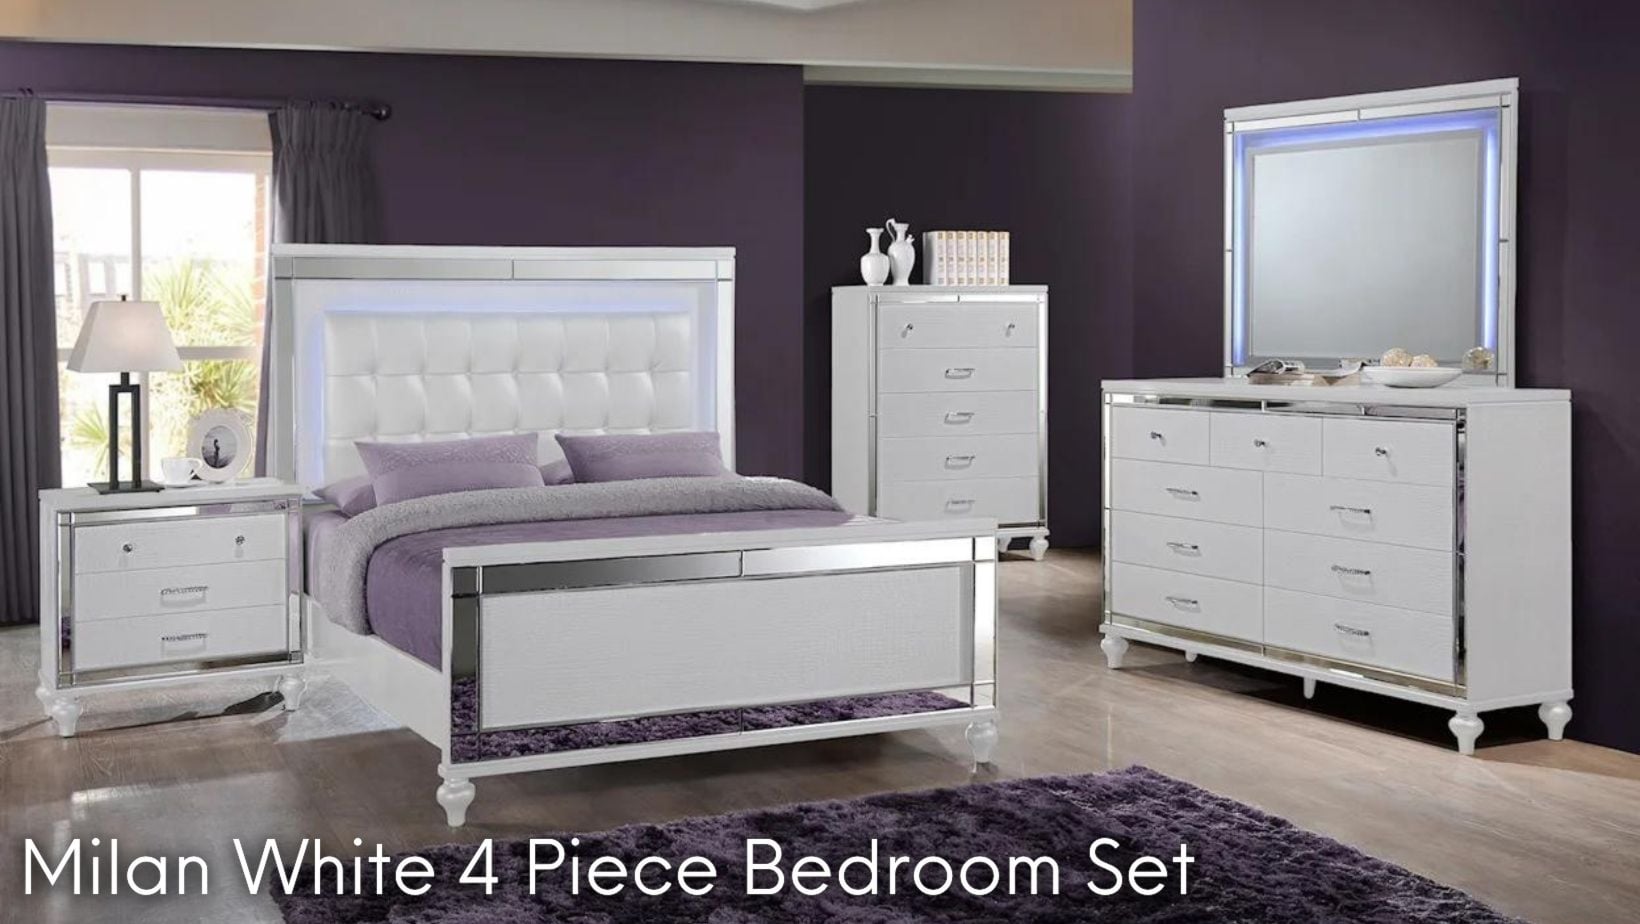 Milan White 4 Piece Bedroom Set